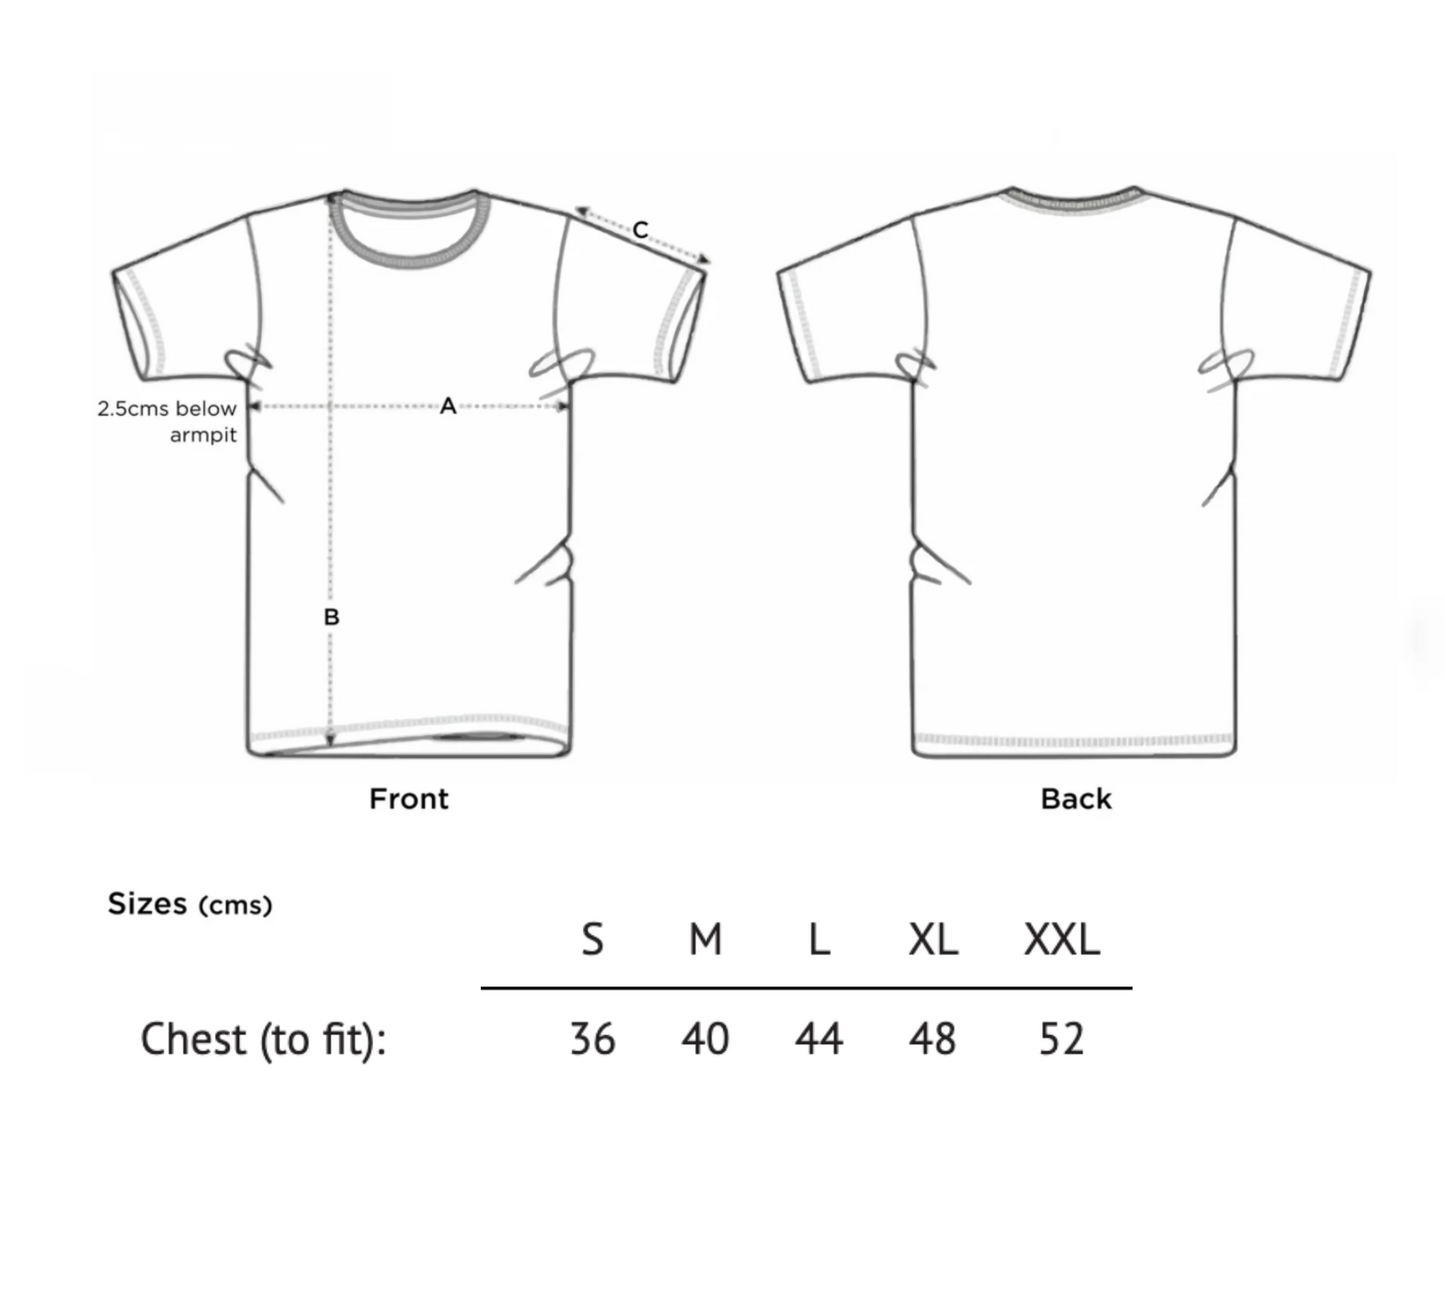 Joseph Quinn Appreciation Fan Club Tie Dye Swirl 100% Cotton Unisex T-Shirt